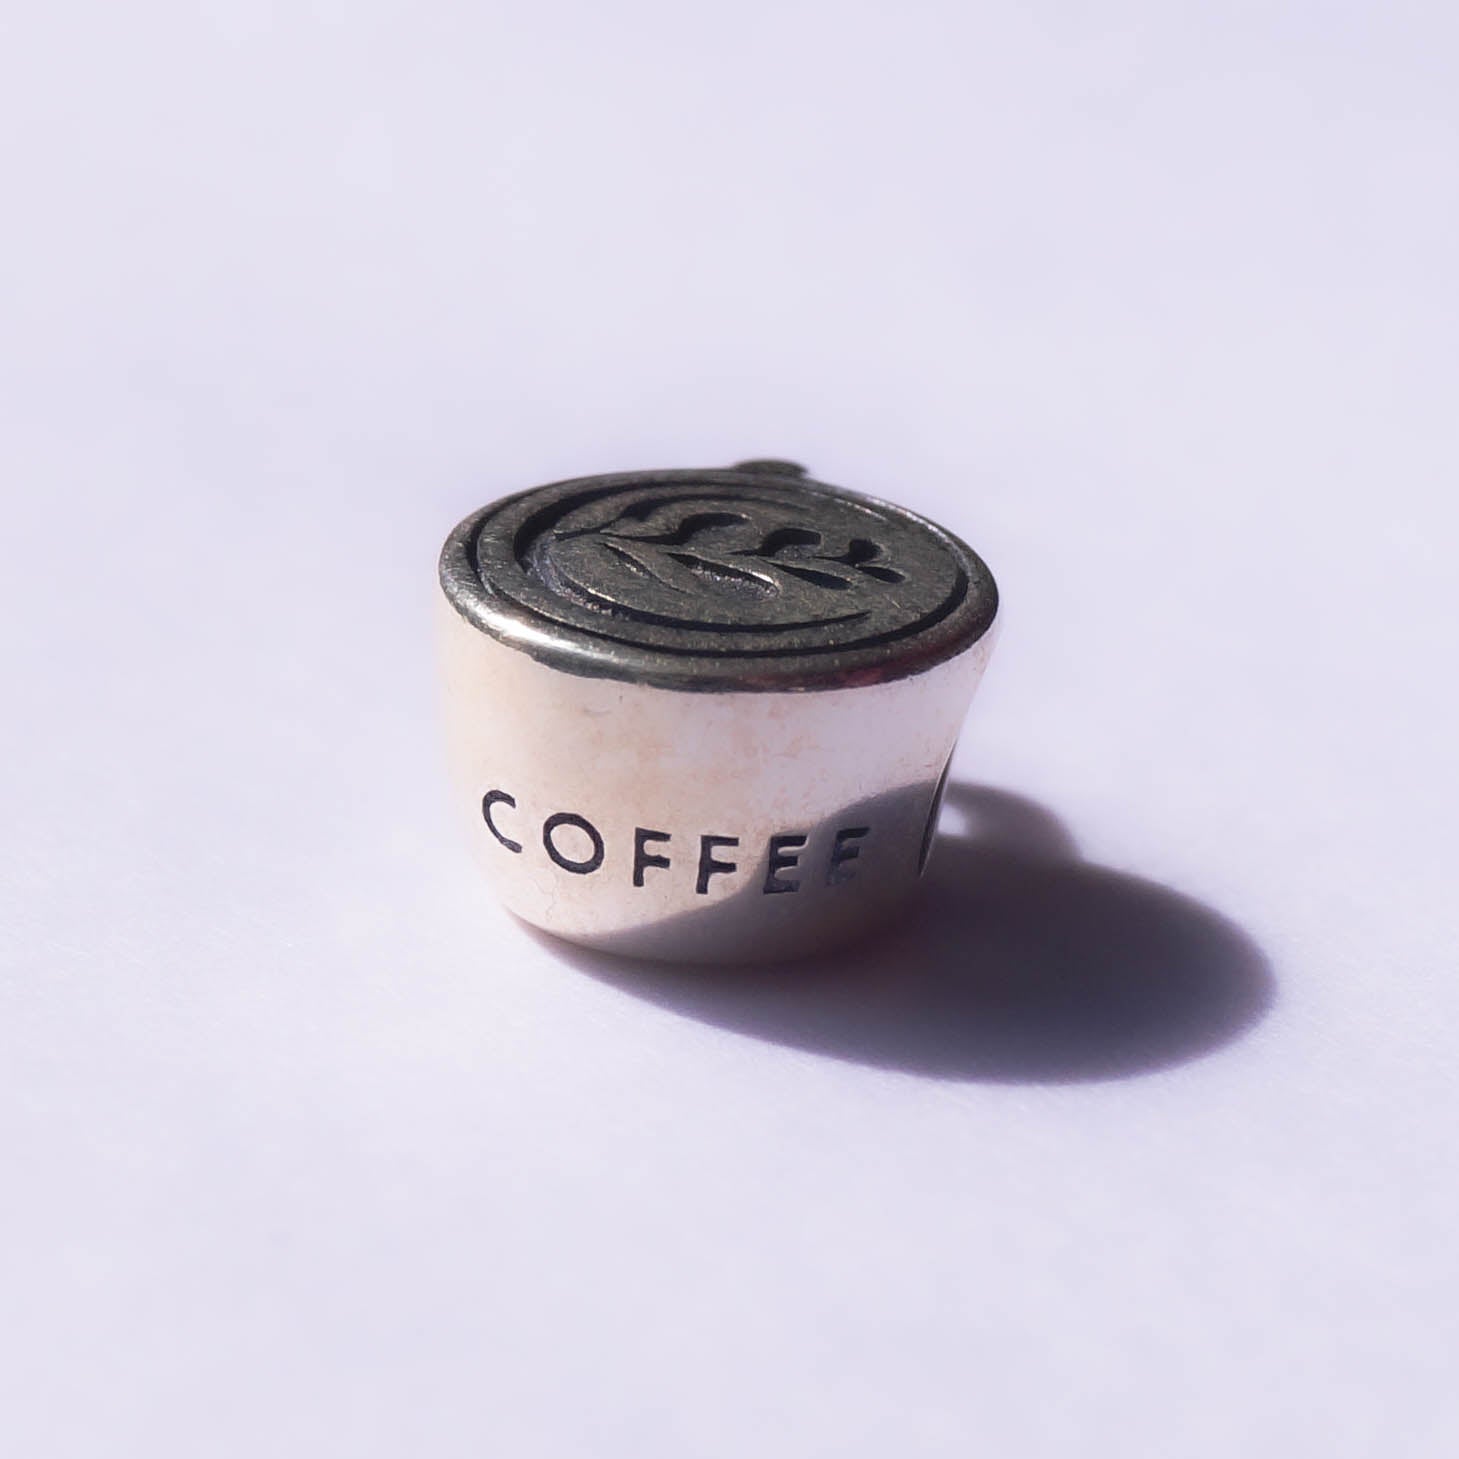 The Coffee Mug Charm